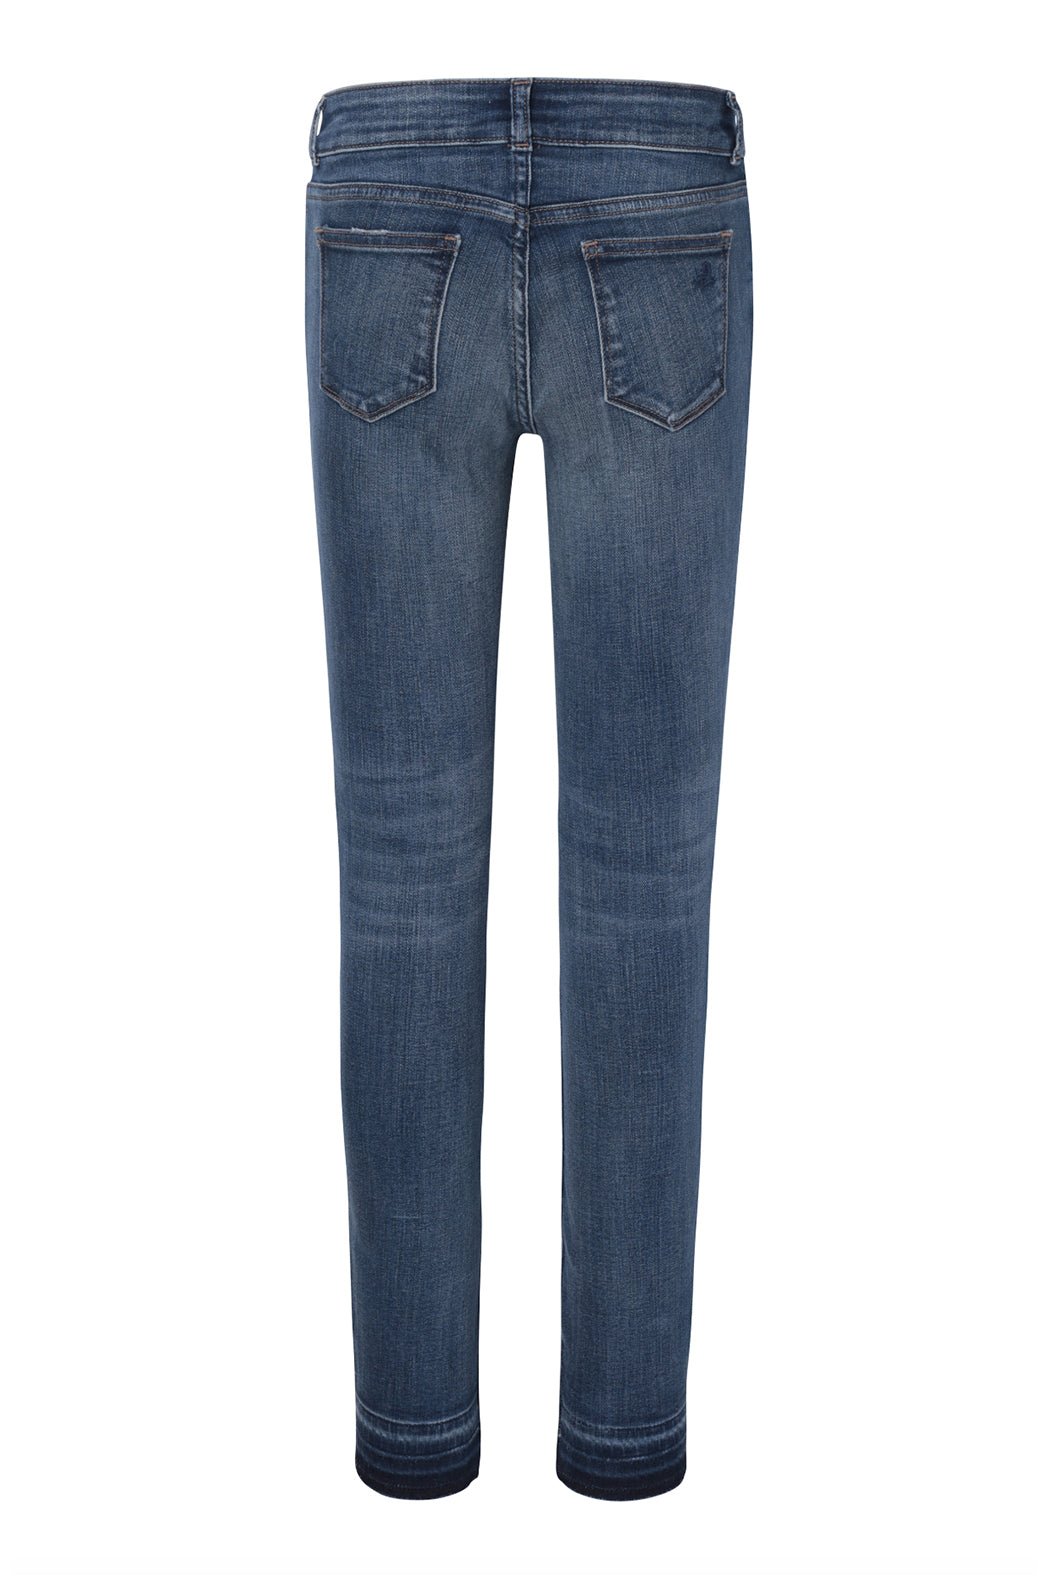 DL1961 Chloe Skinny Youth Jeans Preston